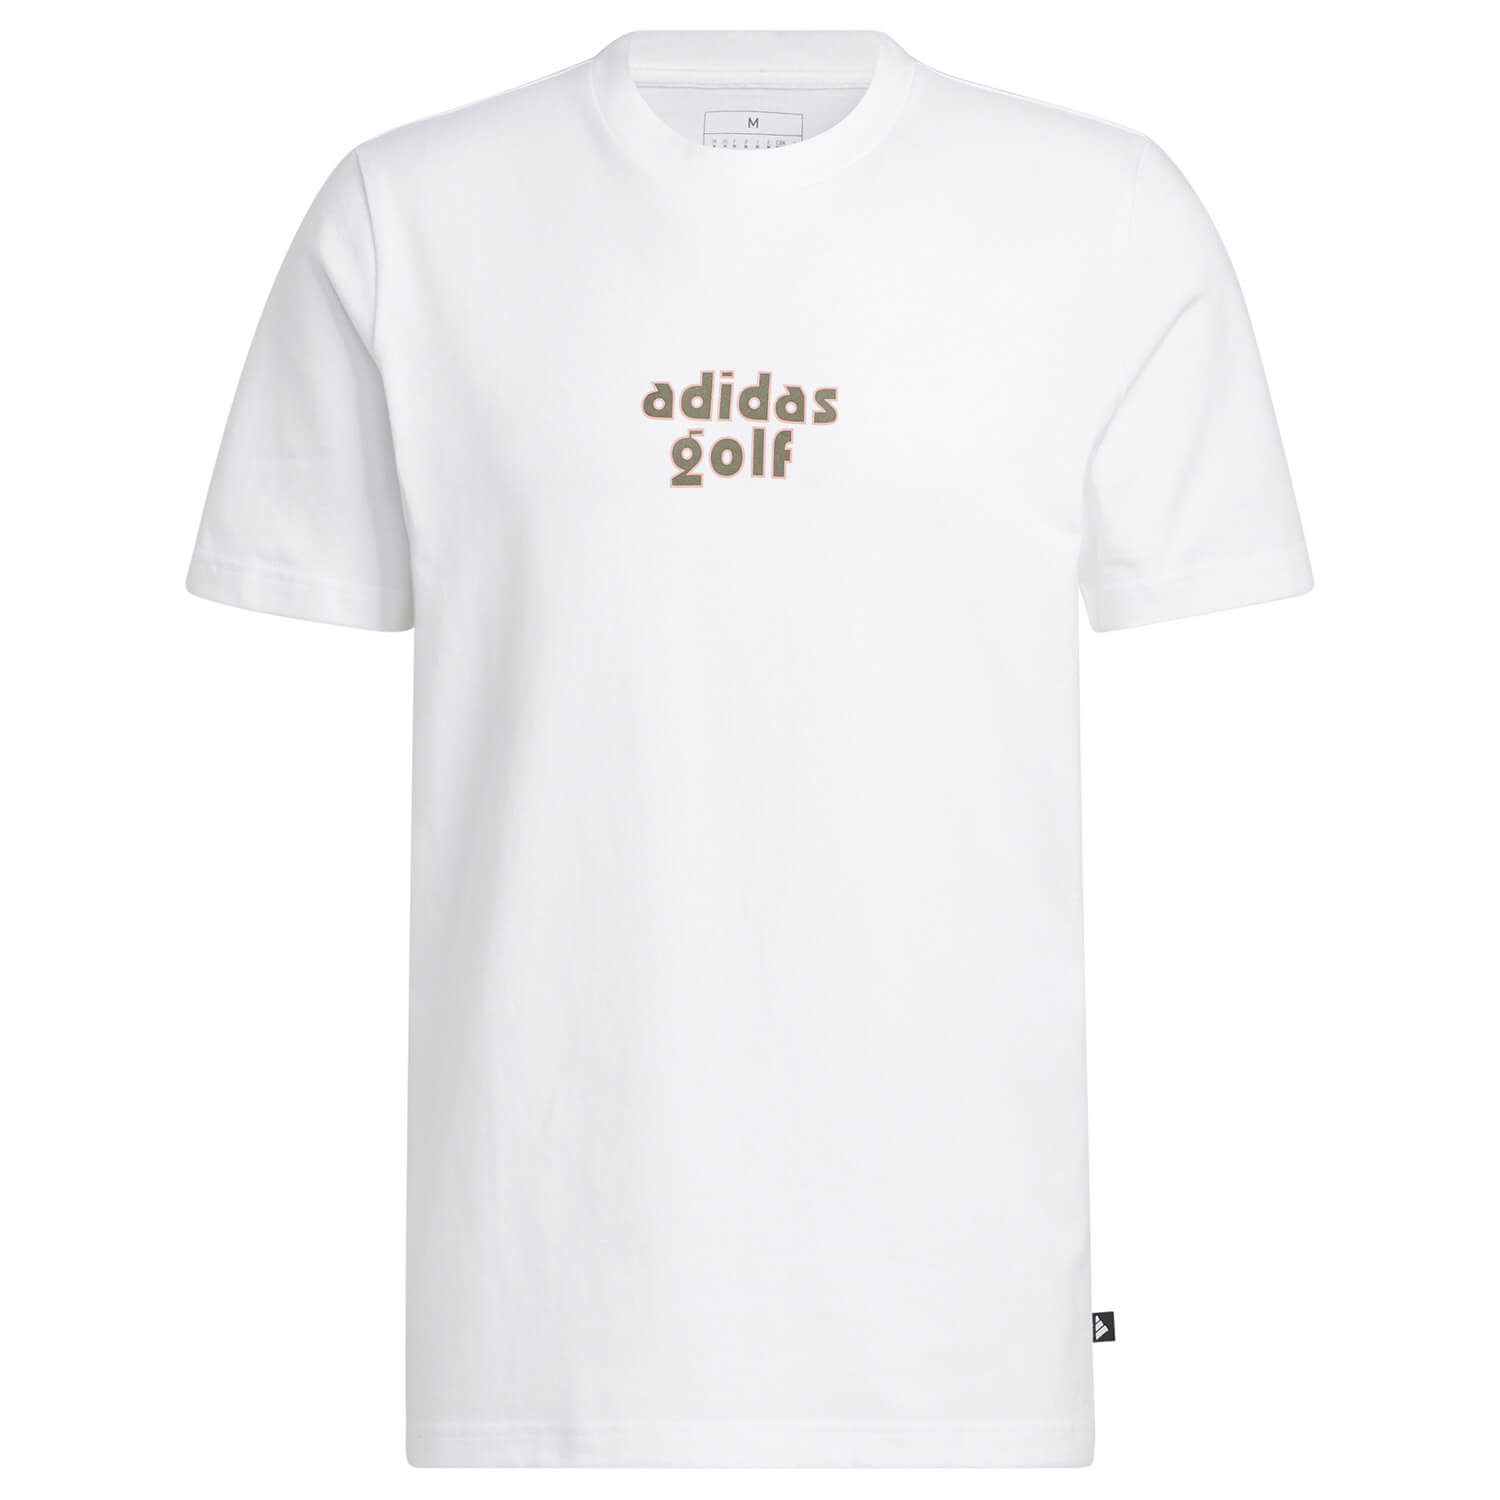 adidas Golf Graphic Tee